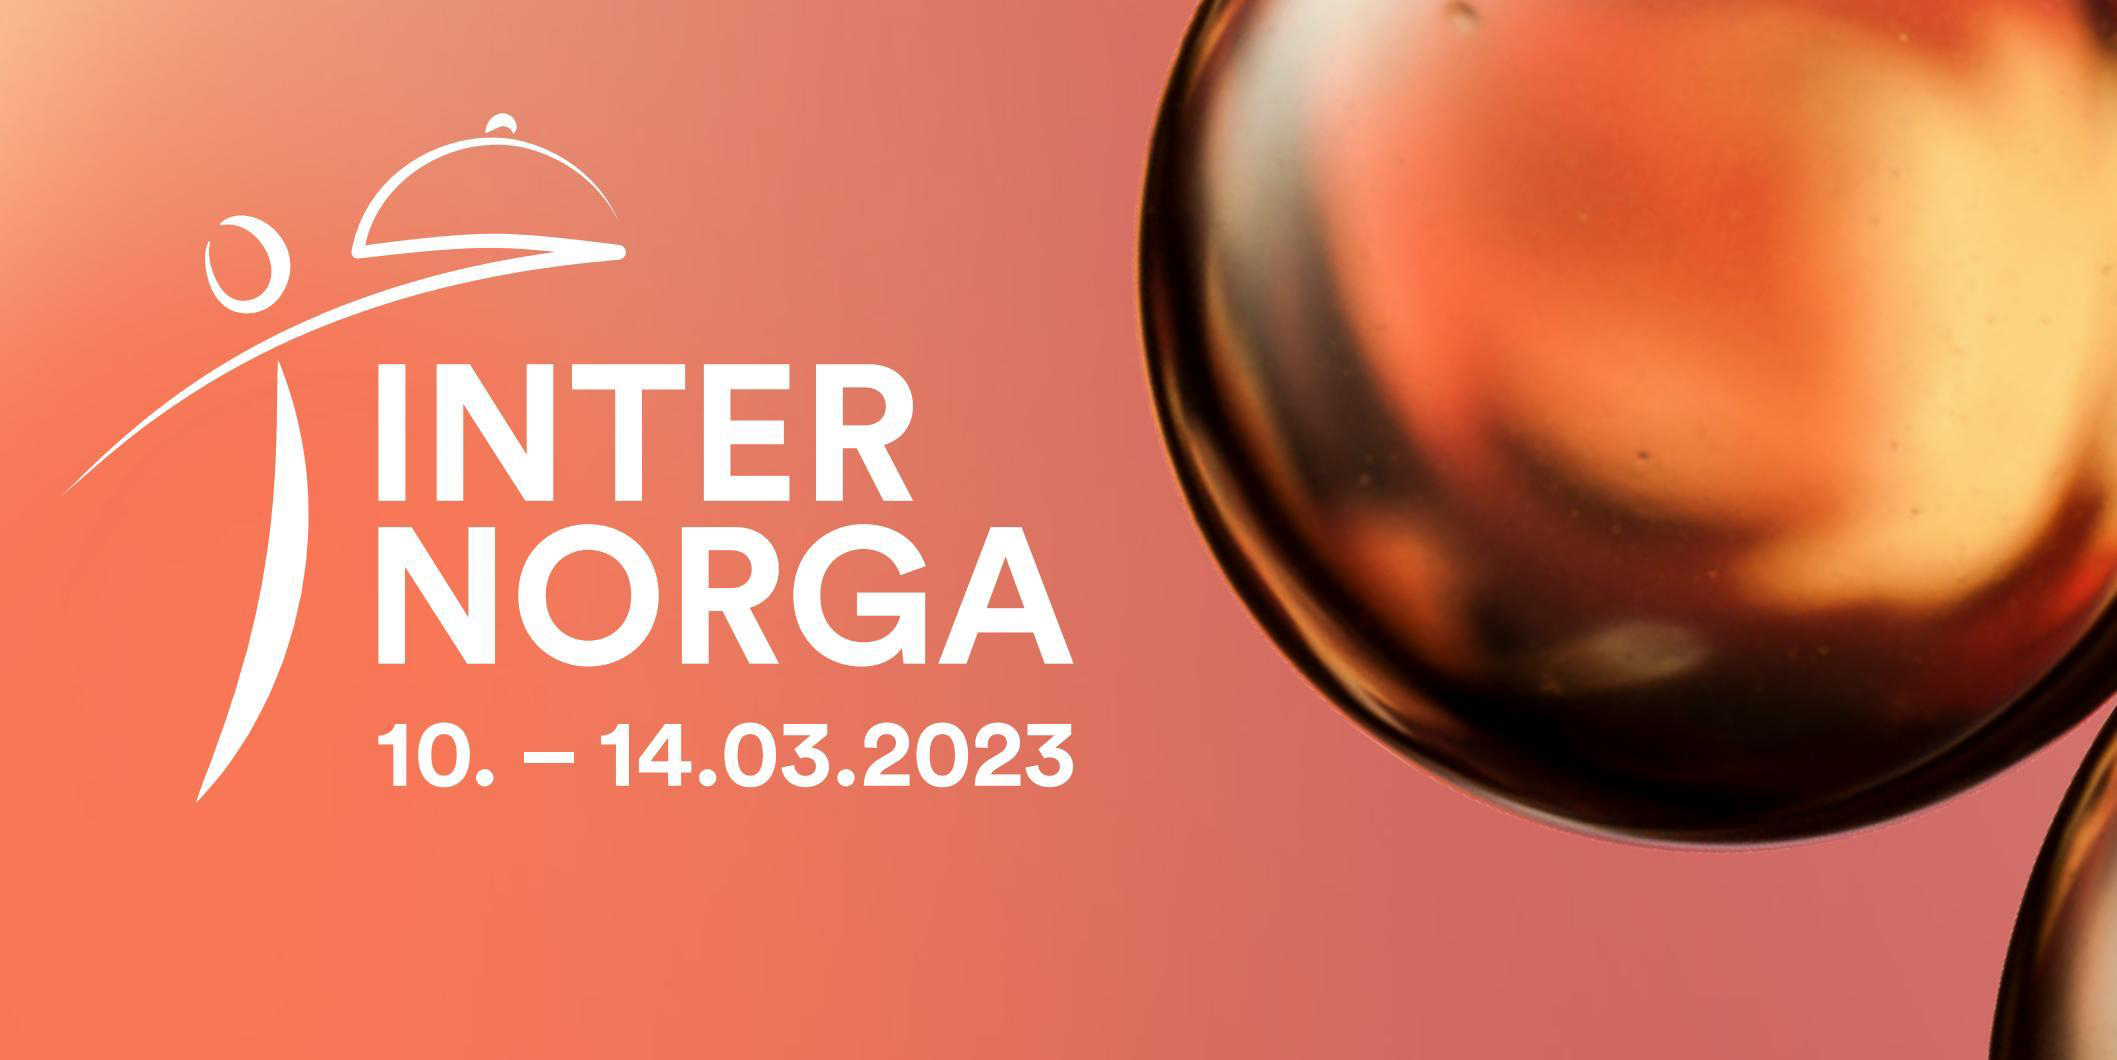 Internorga fair 2023